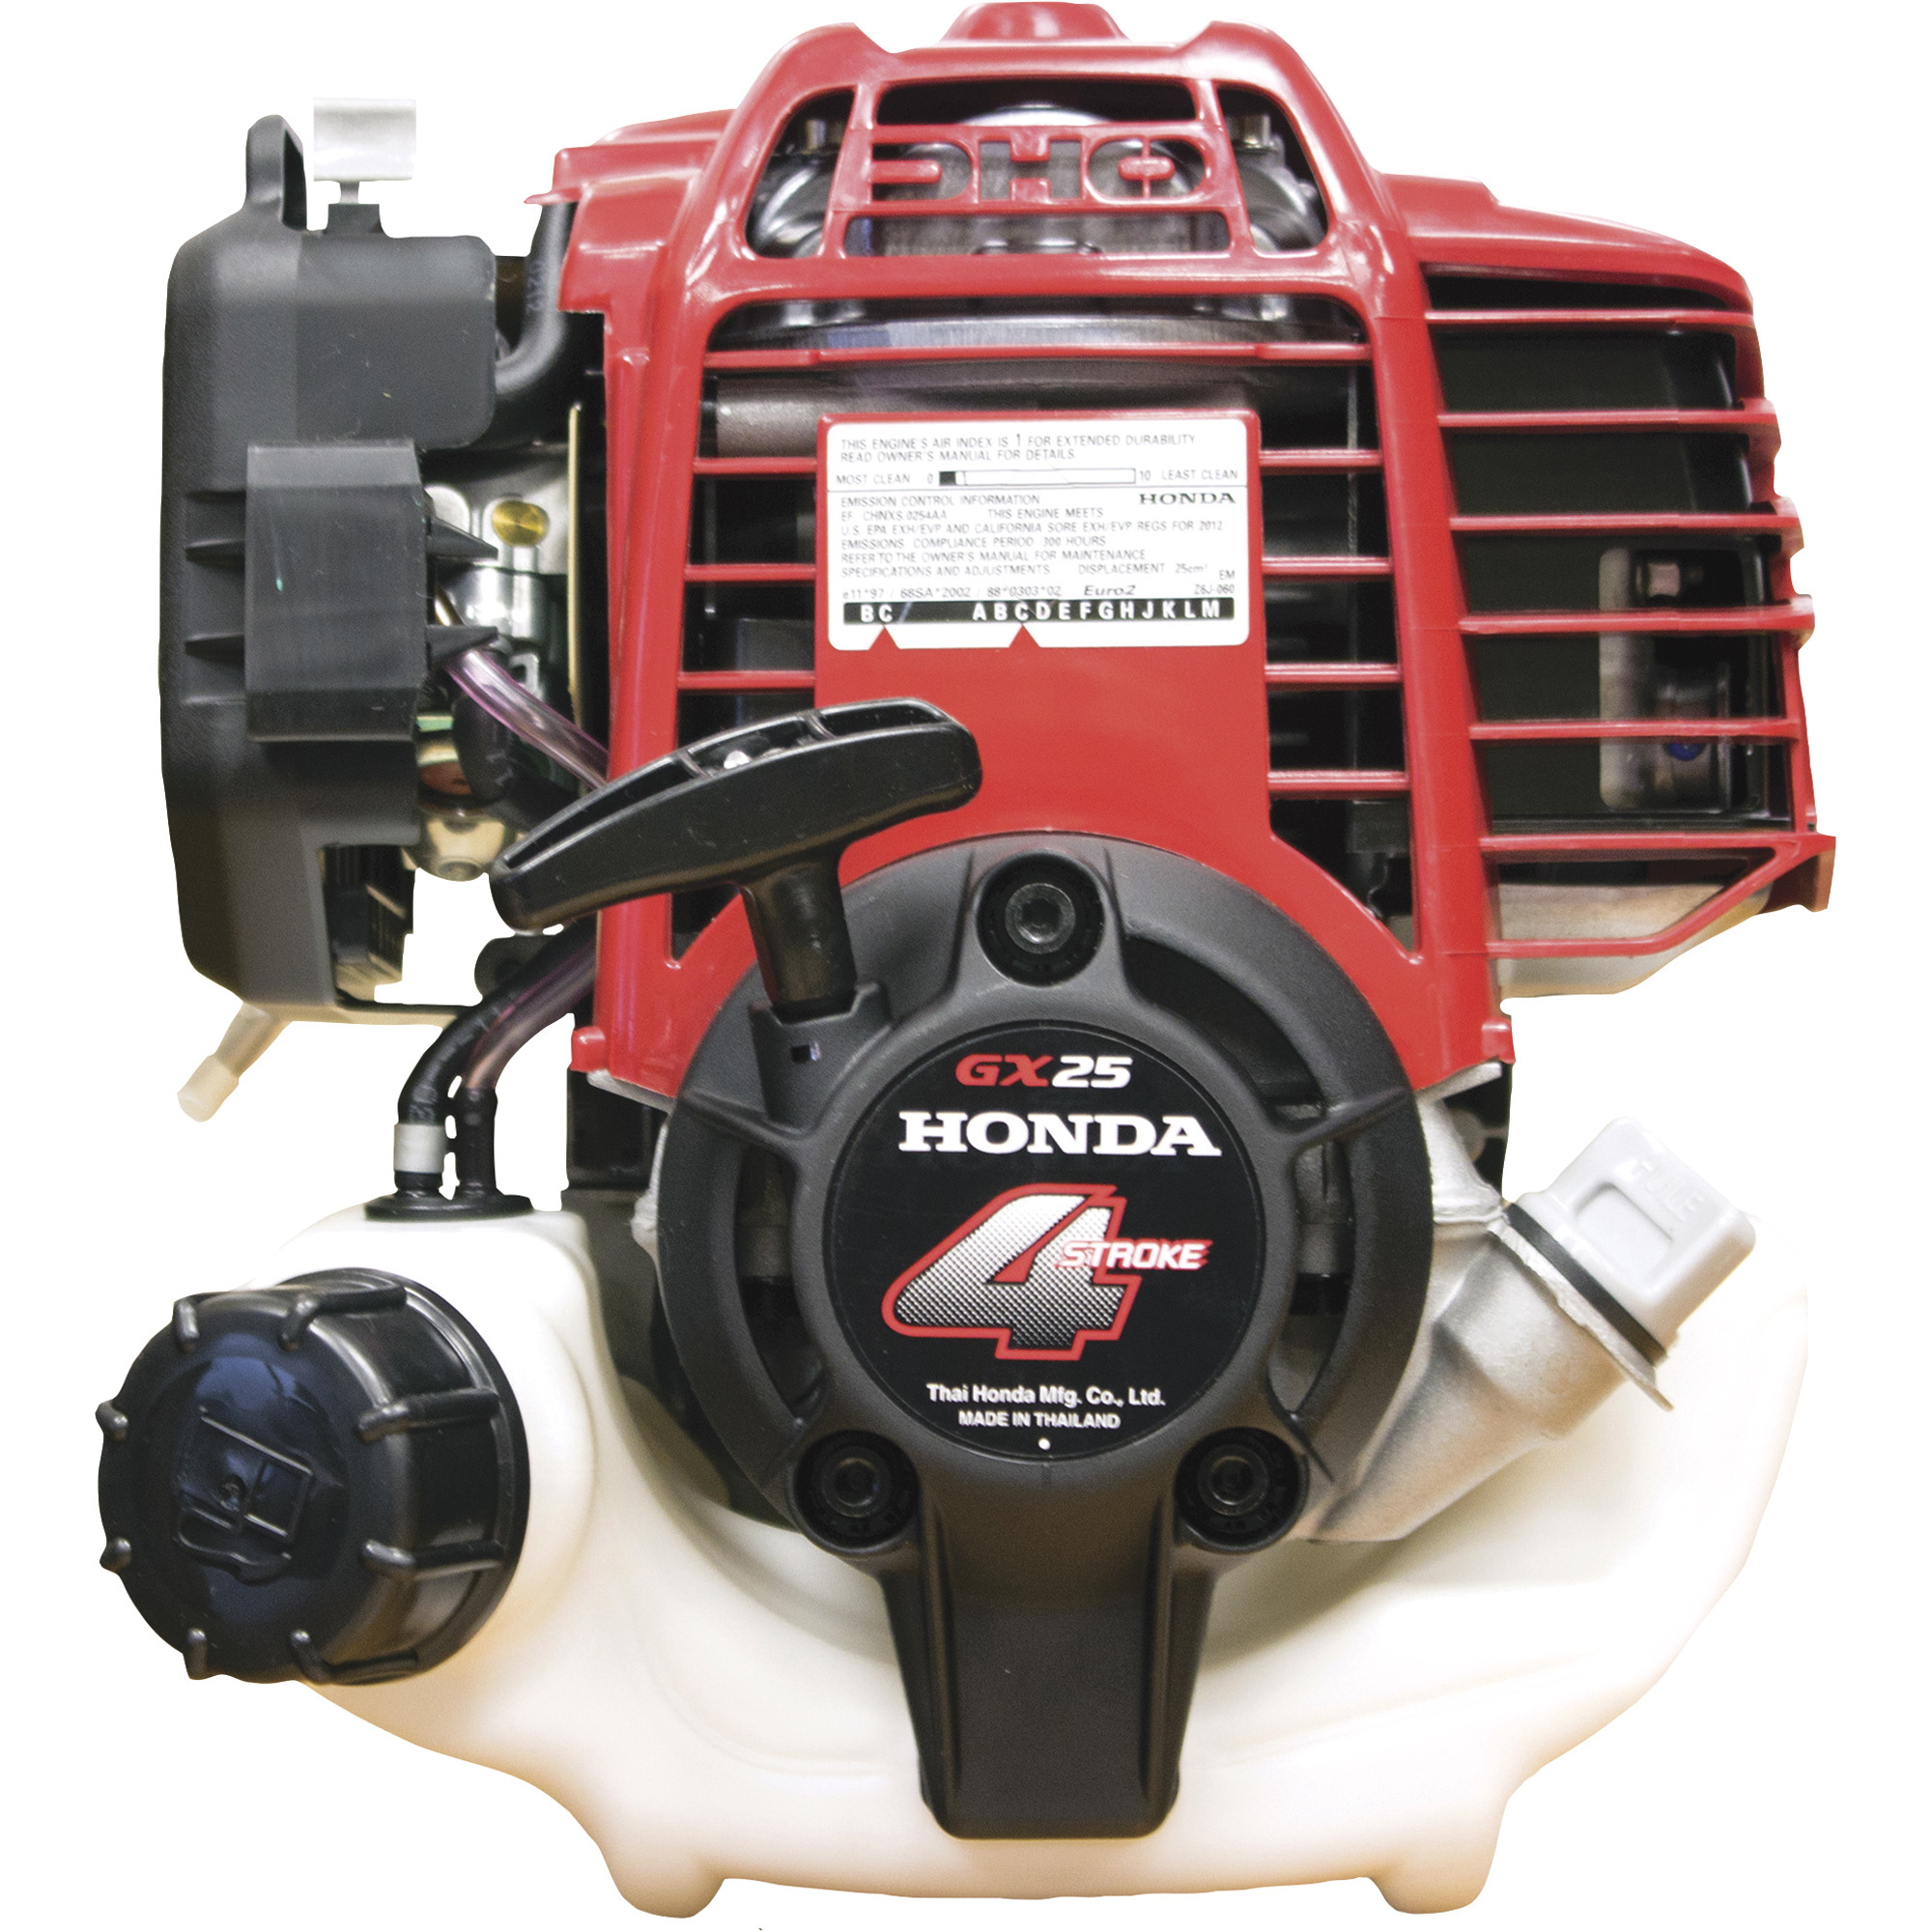 Honda Vertical OHC Engine â 25cc, GX Series, Clutch with Crank/Piston Assembly, Model GX25NTT3